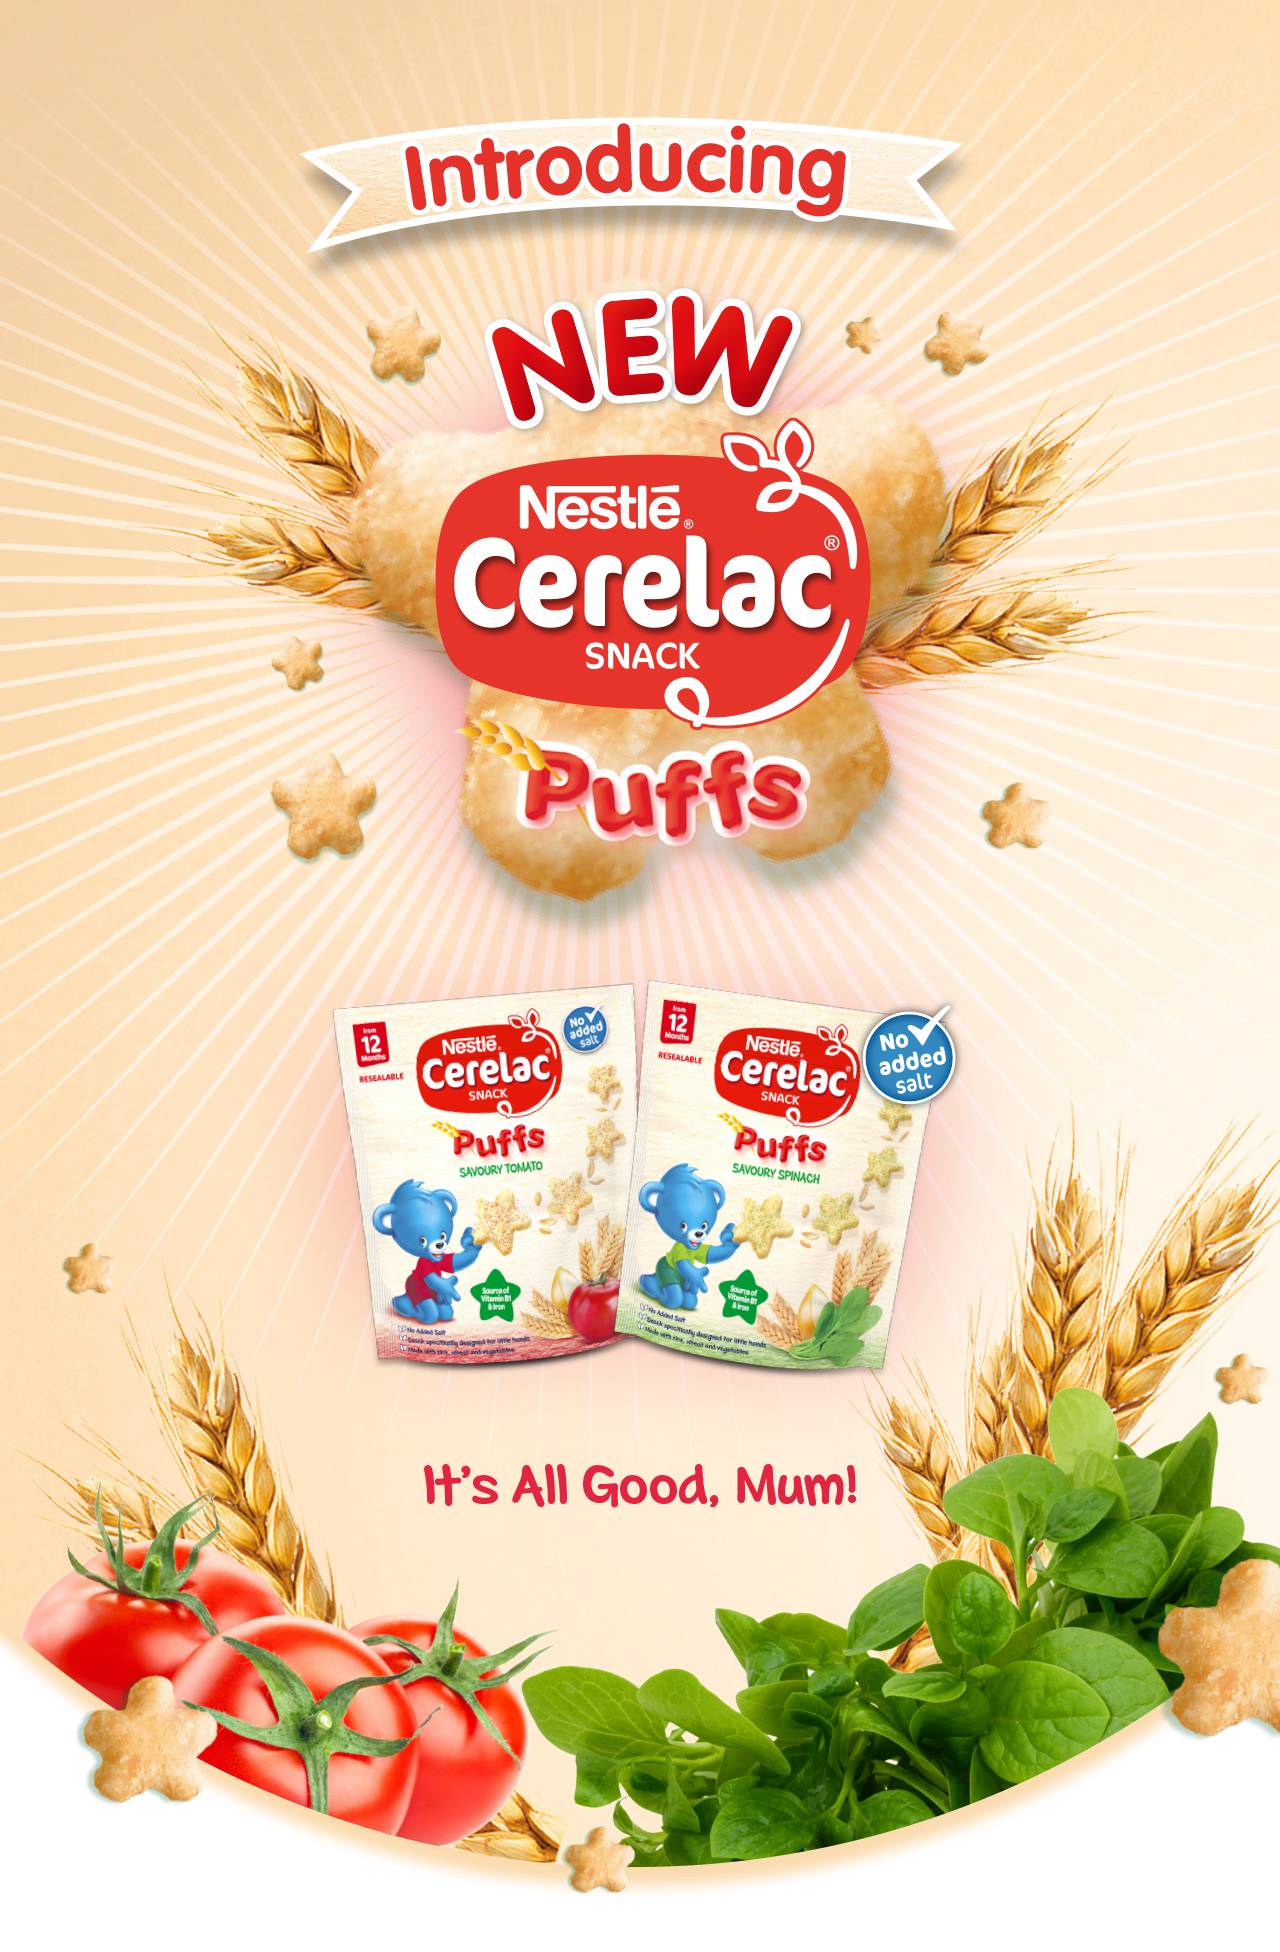 Introducing new Nestlé Cerelac Snack Puffs.